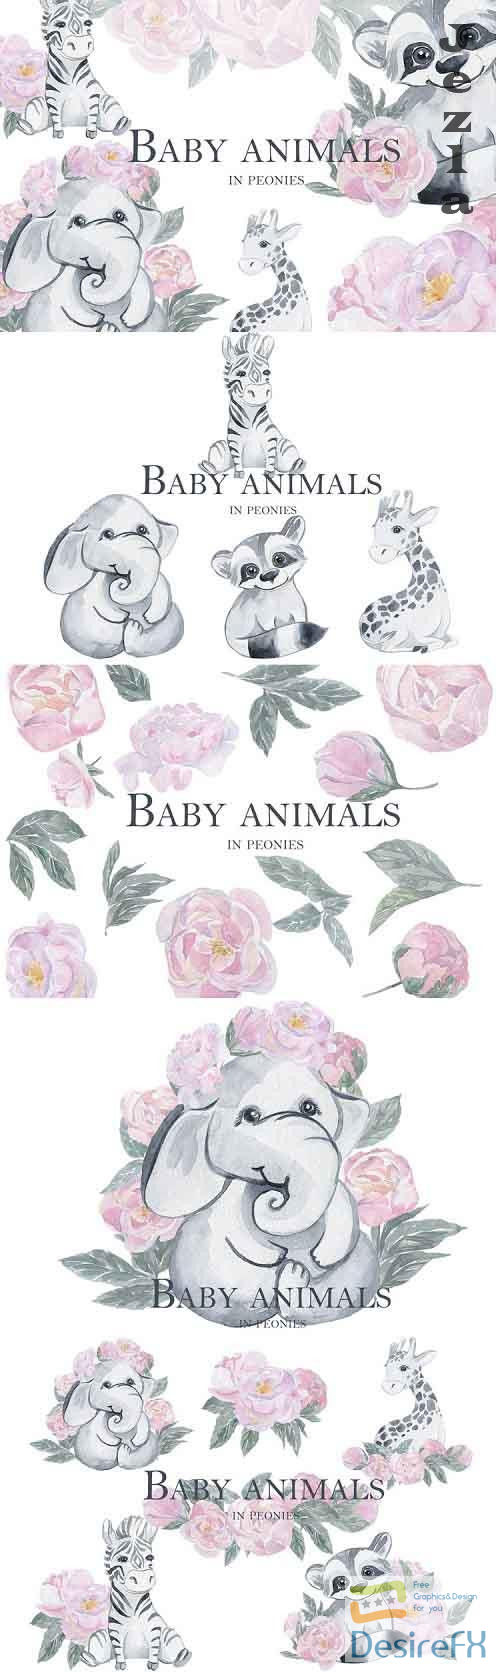 Baby animals in peonies - 816085